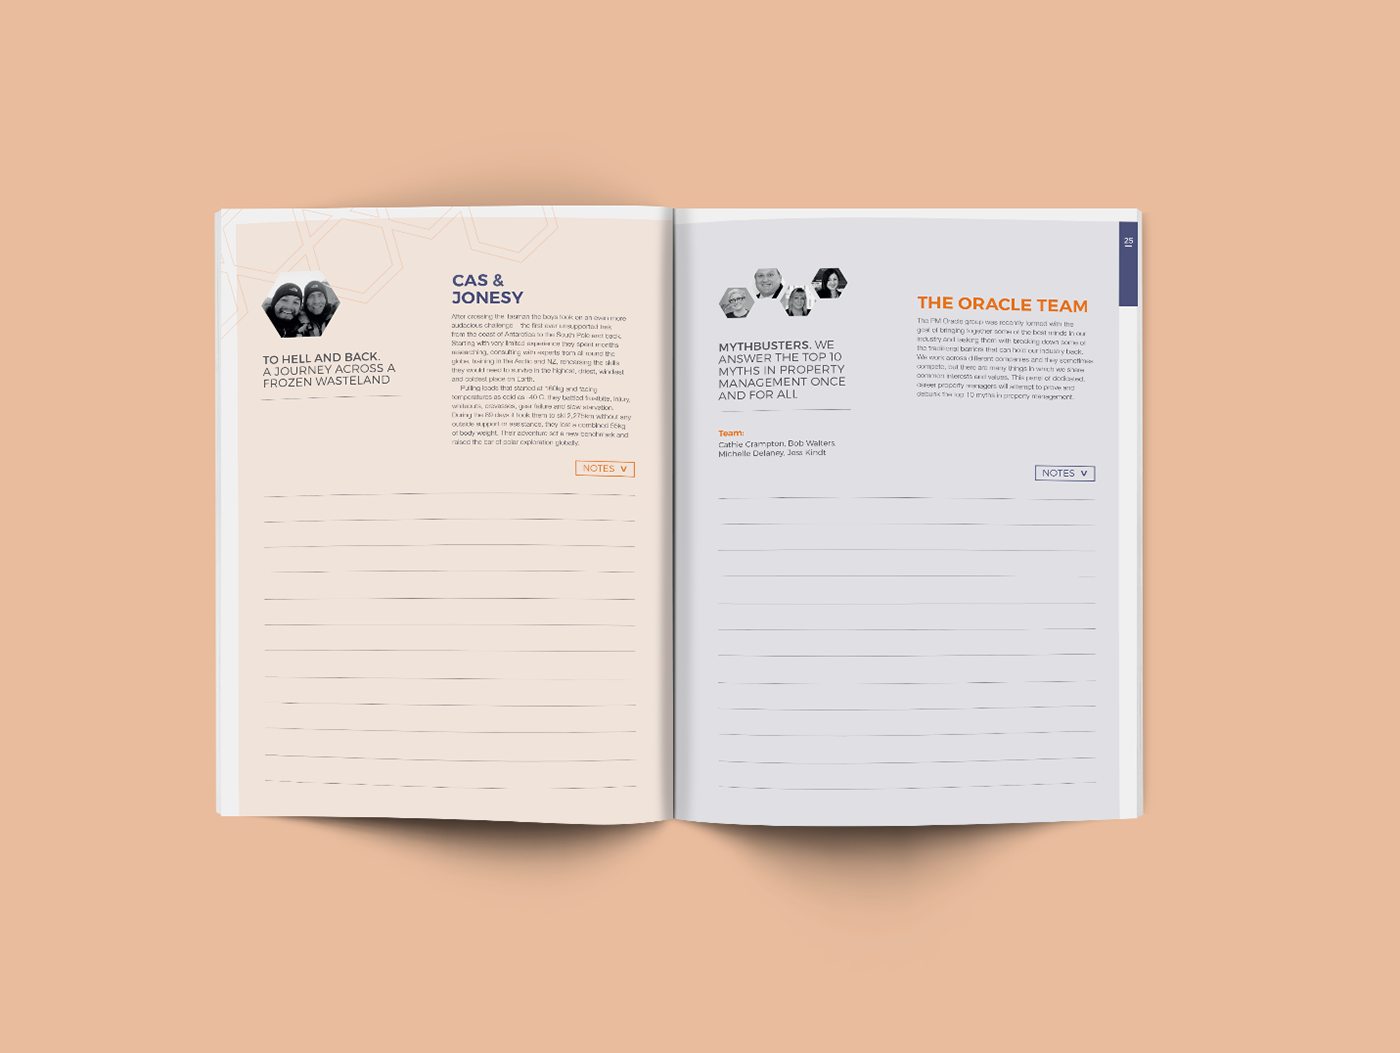 brand orange blue grey Booklet property conference management purple colour lines Booklet geometric shapes